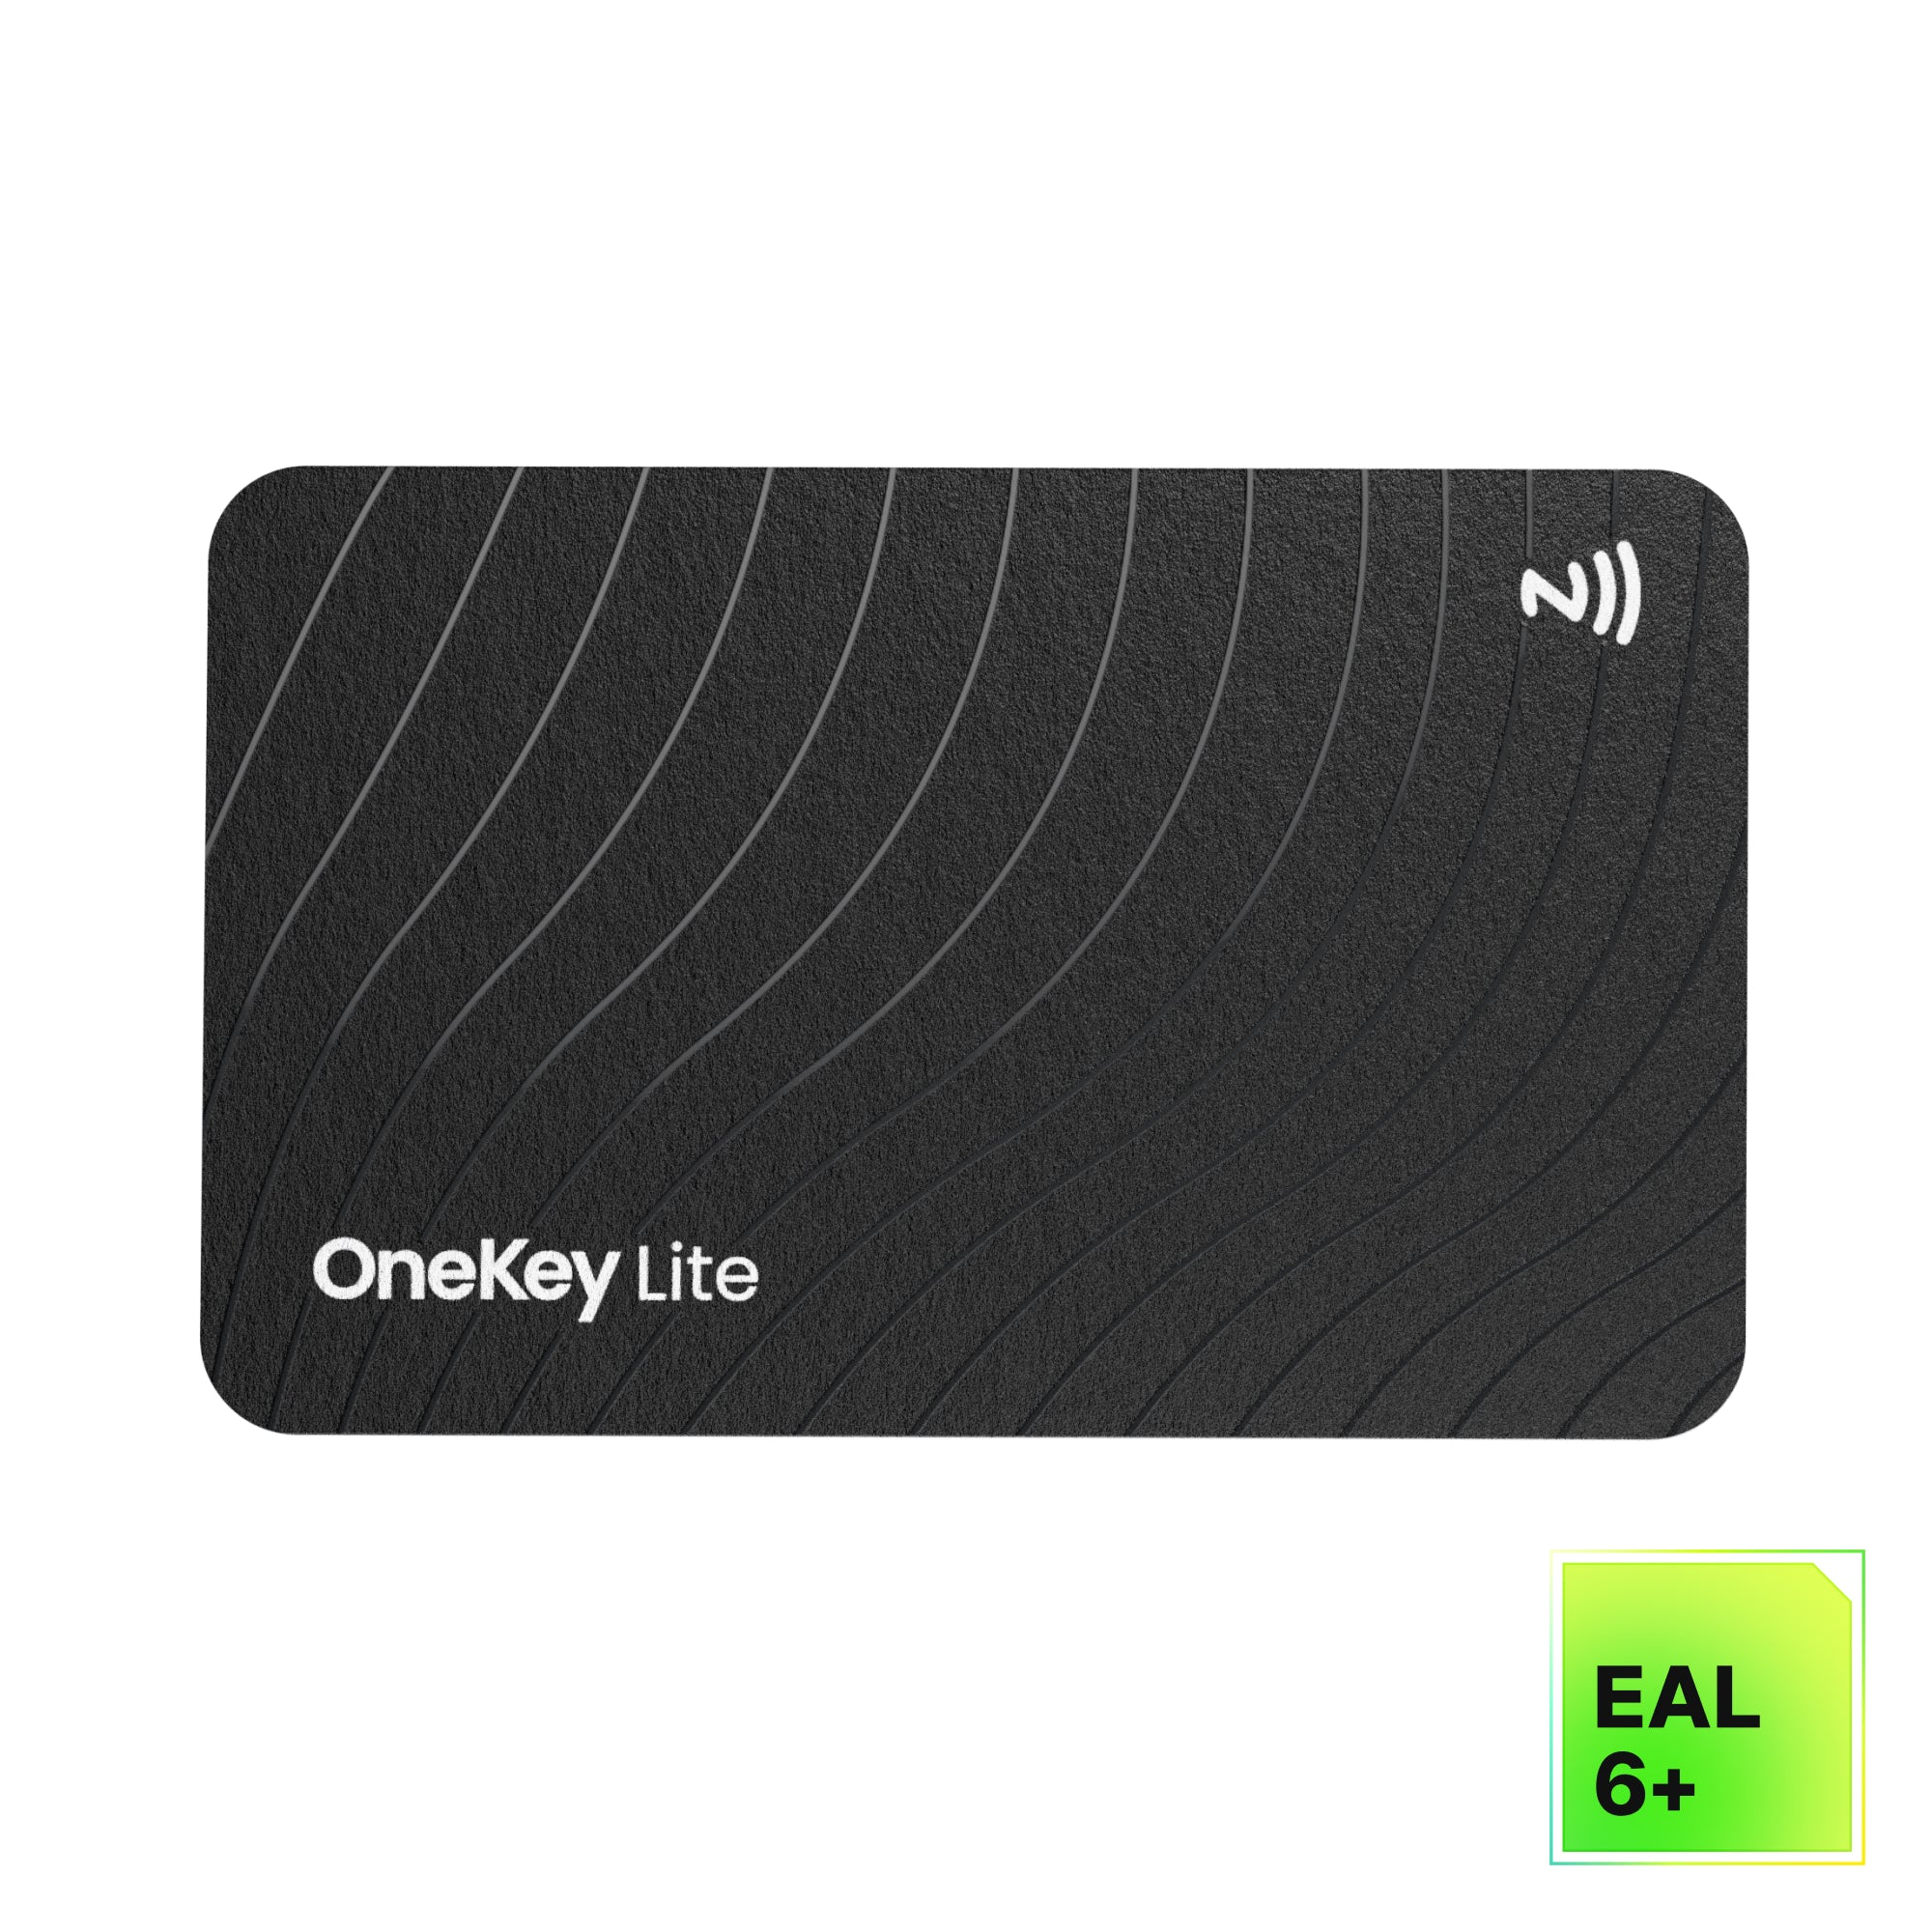 OneKey Lite - リカバリフレーズバックアップカード